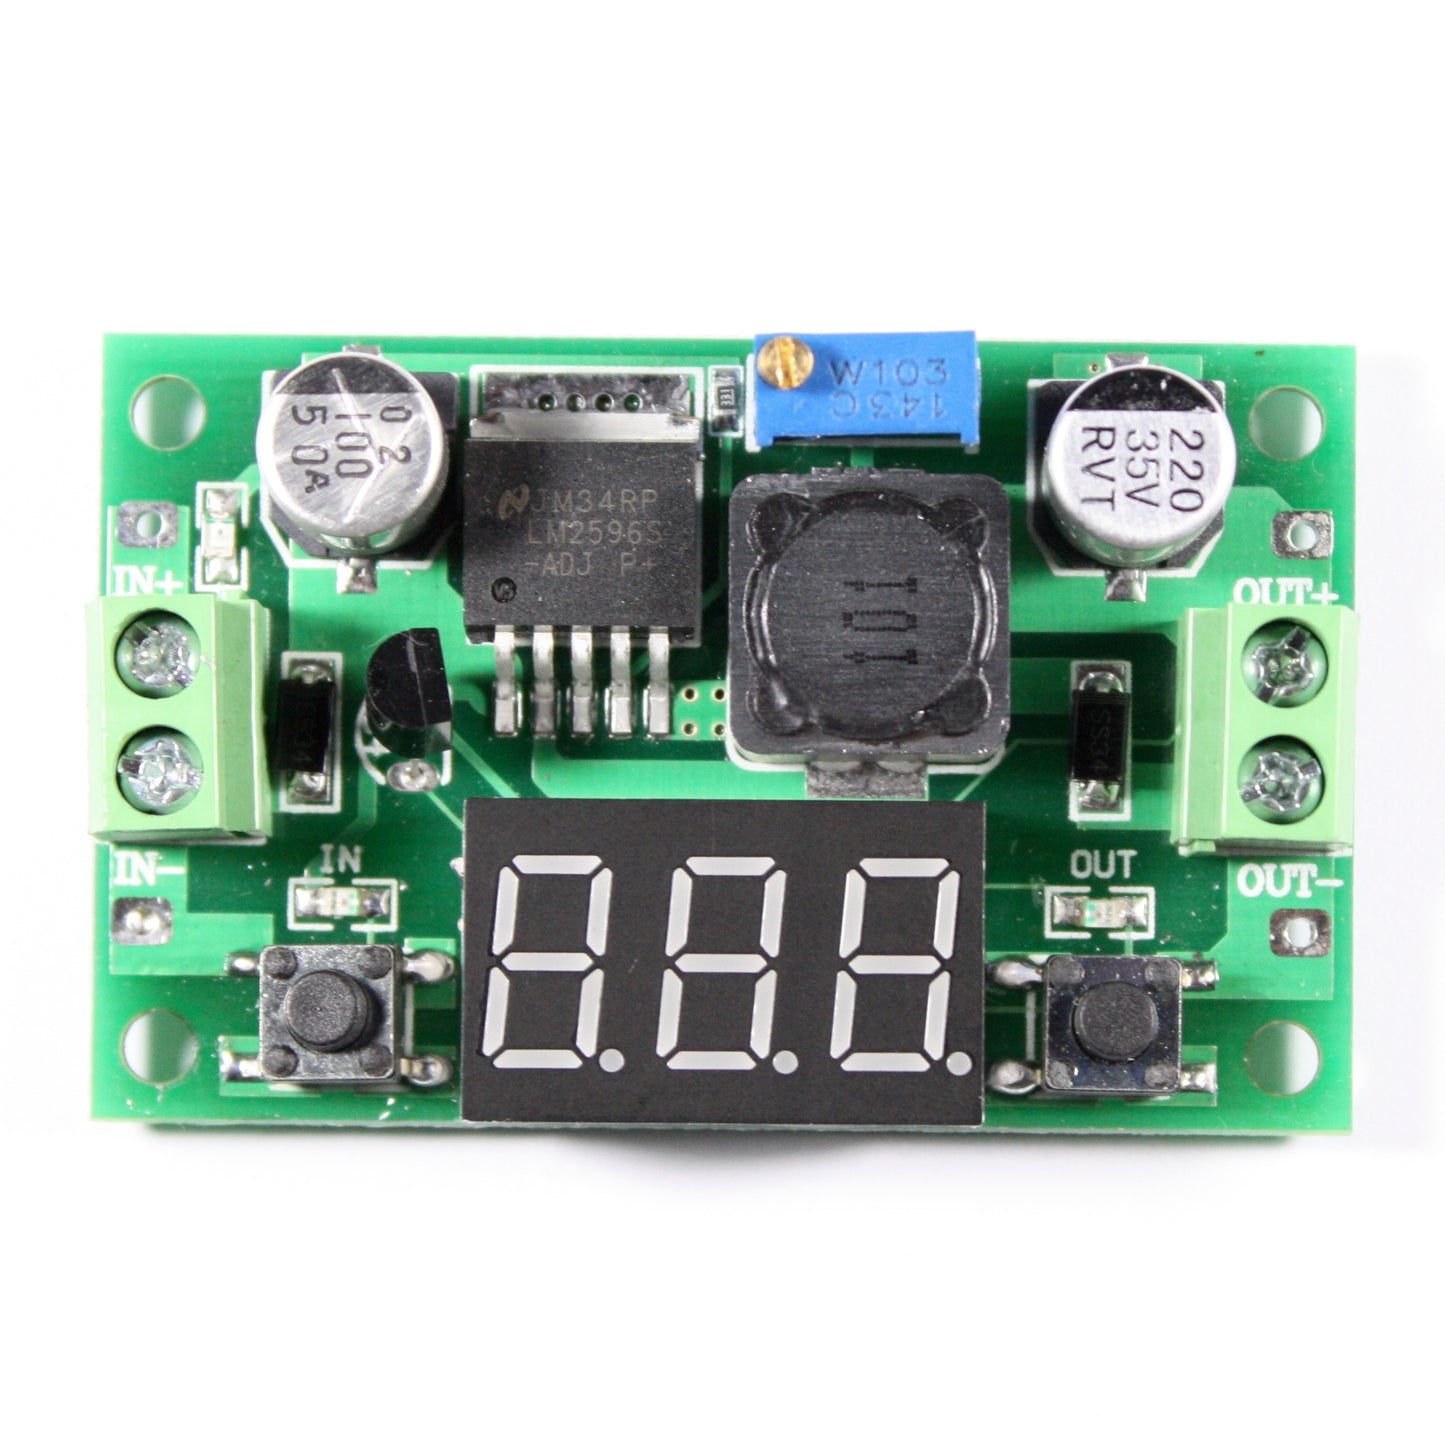 LM2596 Step-Down Voltage Regulator Module: Precise Control from 4-40V to 1.3V-37V with 7-Segment LED Display Voltmeter